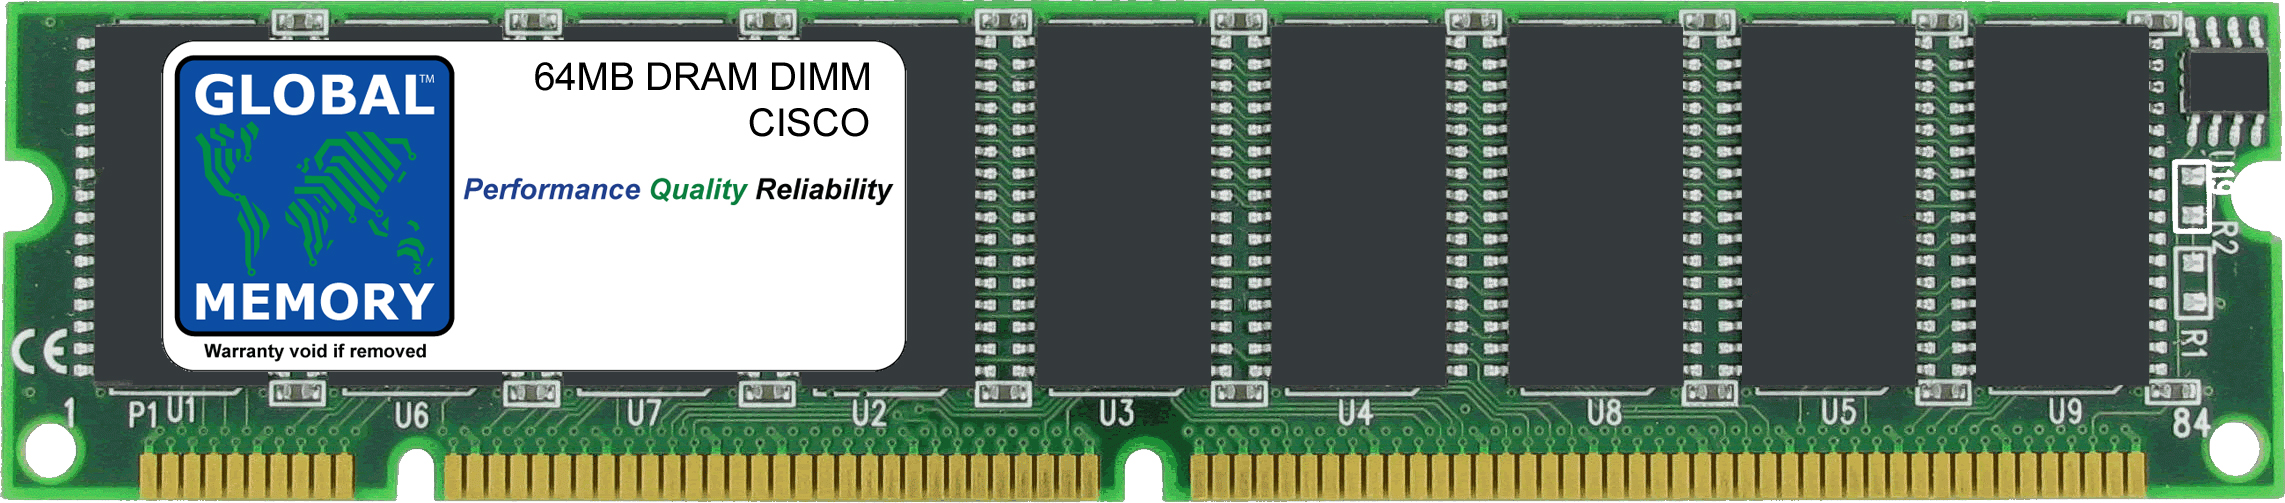 64MB DRAM DIMM MEMORY RAM FOR CISCO AS5350 UNIVERSAL GATEWAY (MEM-64S-AS535)